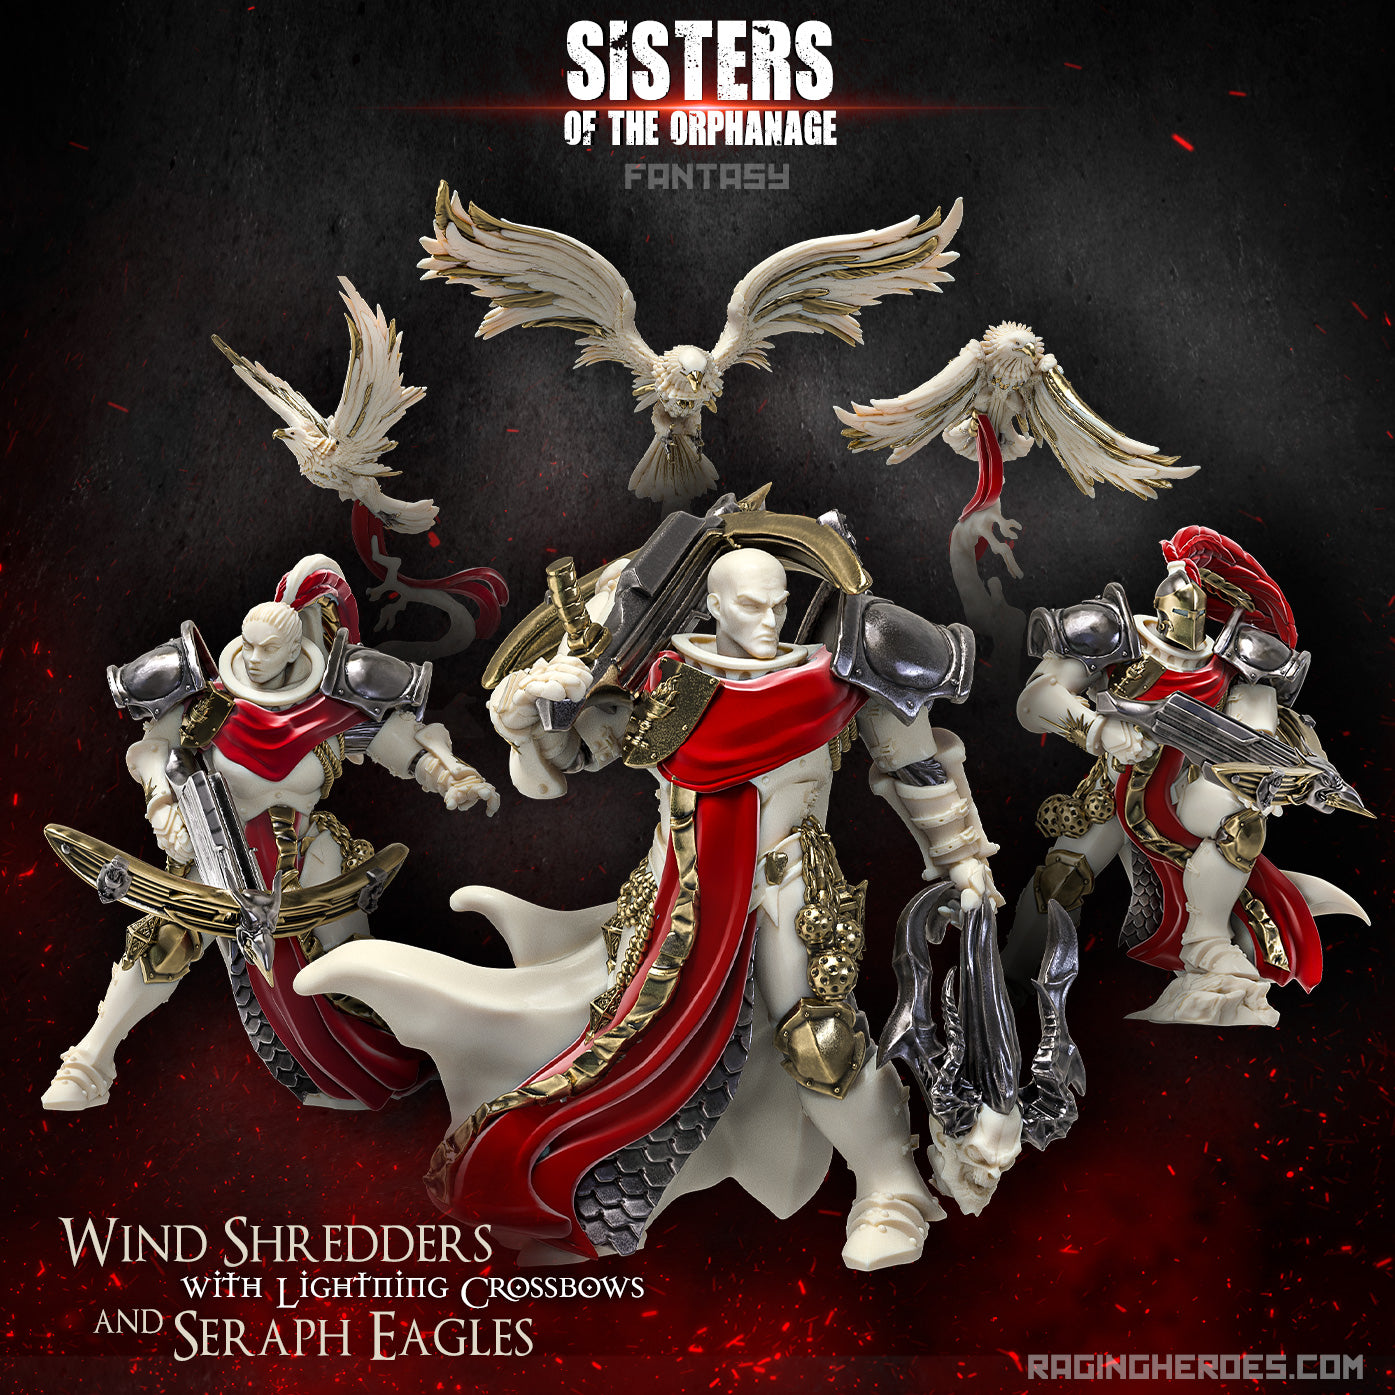 Wind Shredders und Seraph Eagles (Schwestern - F)